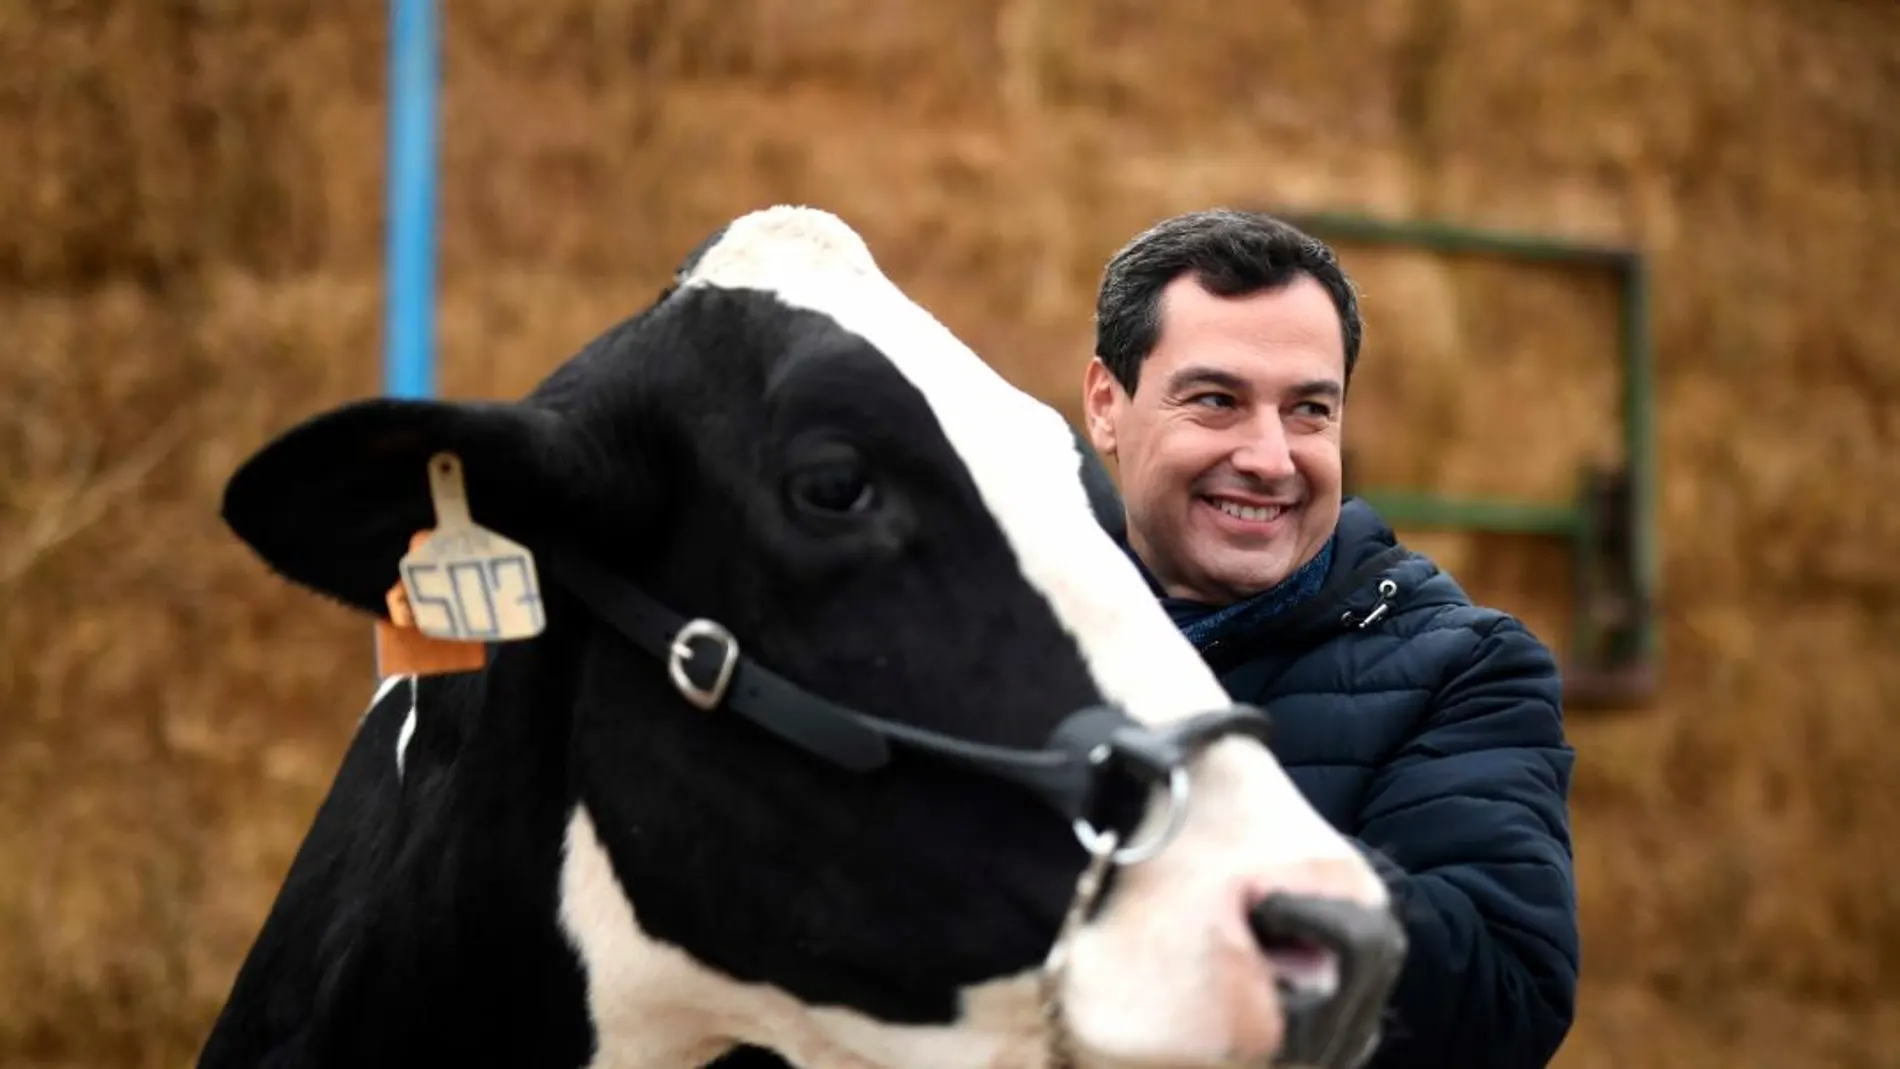 El líder del PP, Juanma Moreno, visitó ayer una granja vaquera en Añora, Córdoba / Foto: Efe